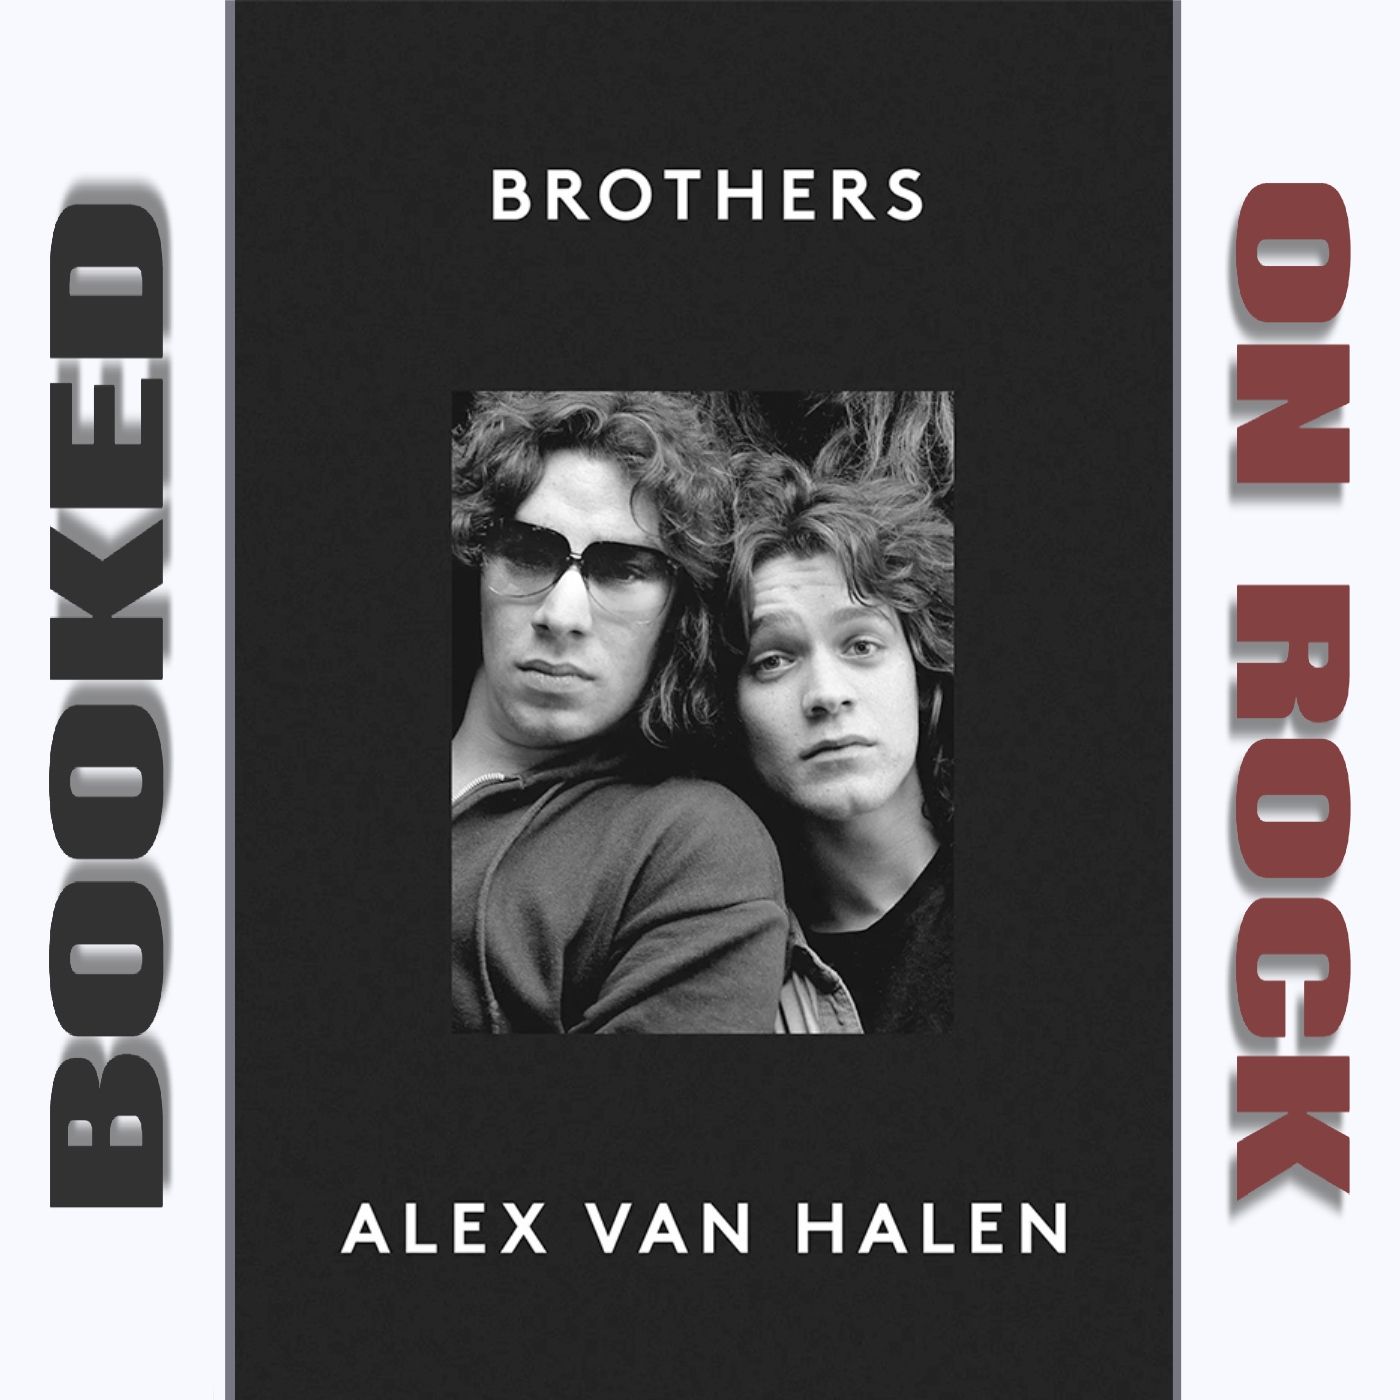 Alex Van Halen’s Autobiography ’Brothers’: A Discussion with Van Halen Authors Greg Renoff & Chris Gill [Episode 182]